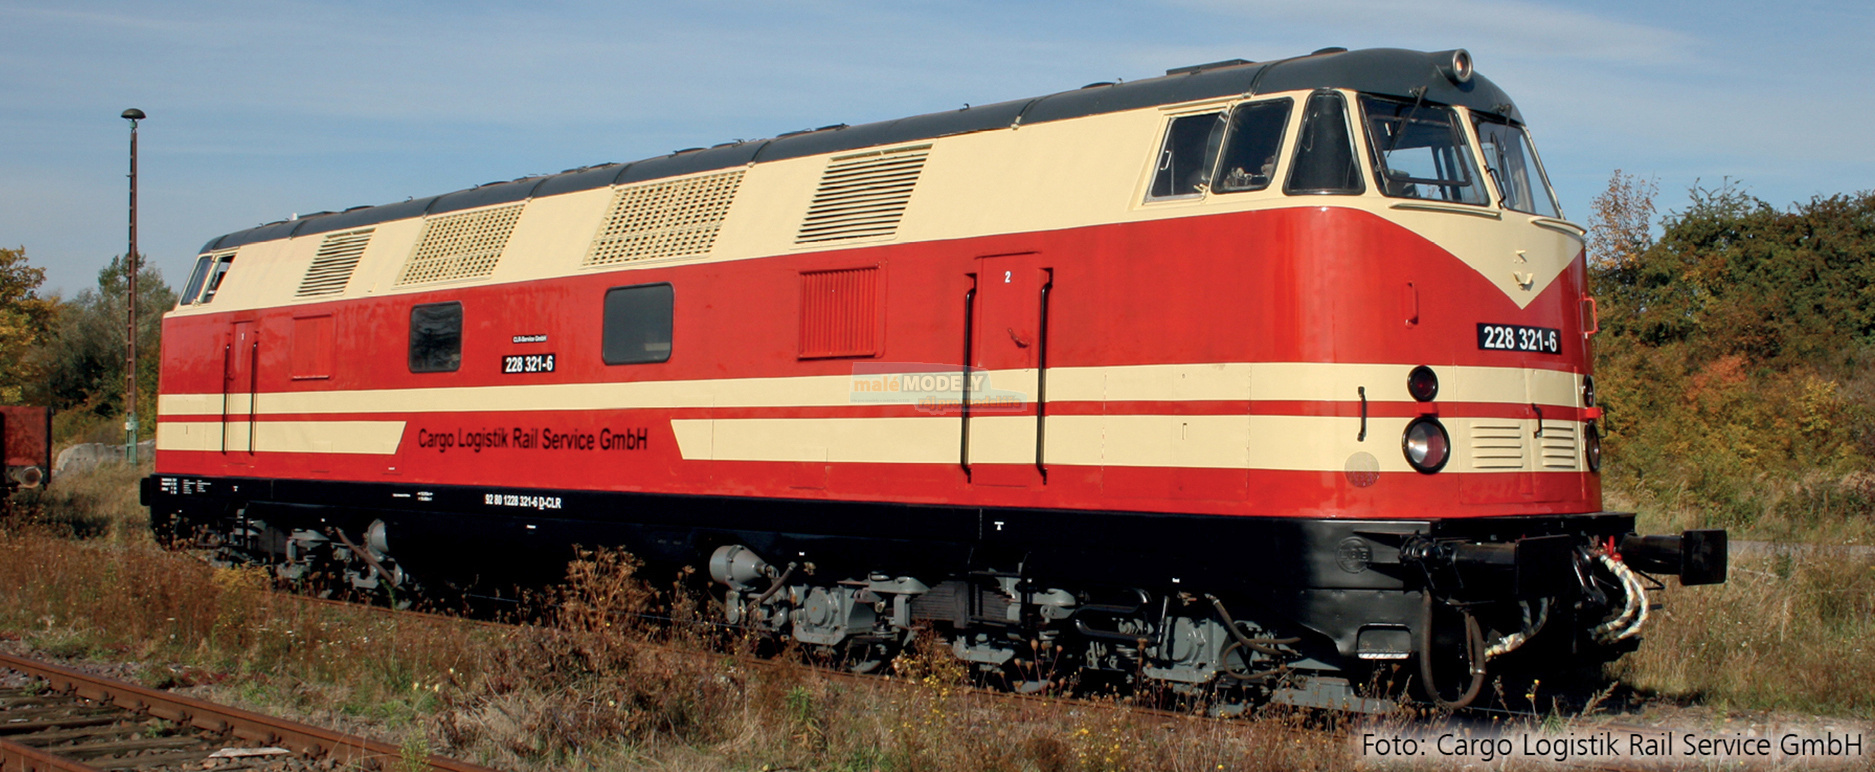 Dieselová lokomotiva 228 321-6, Cargo Logistik Rail Service GmbH - (31.03.2021)